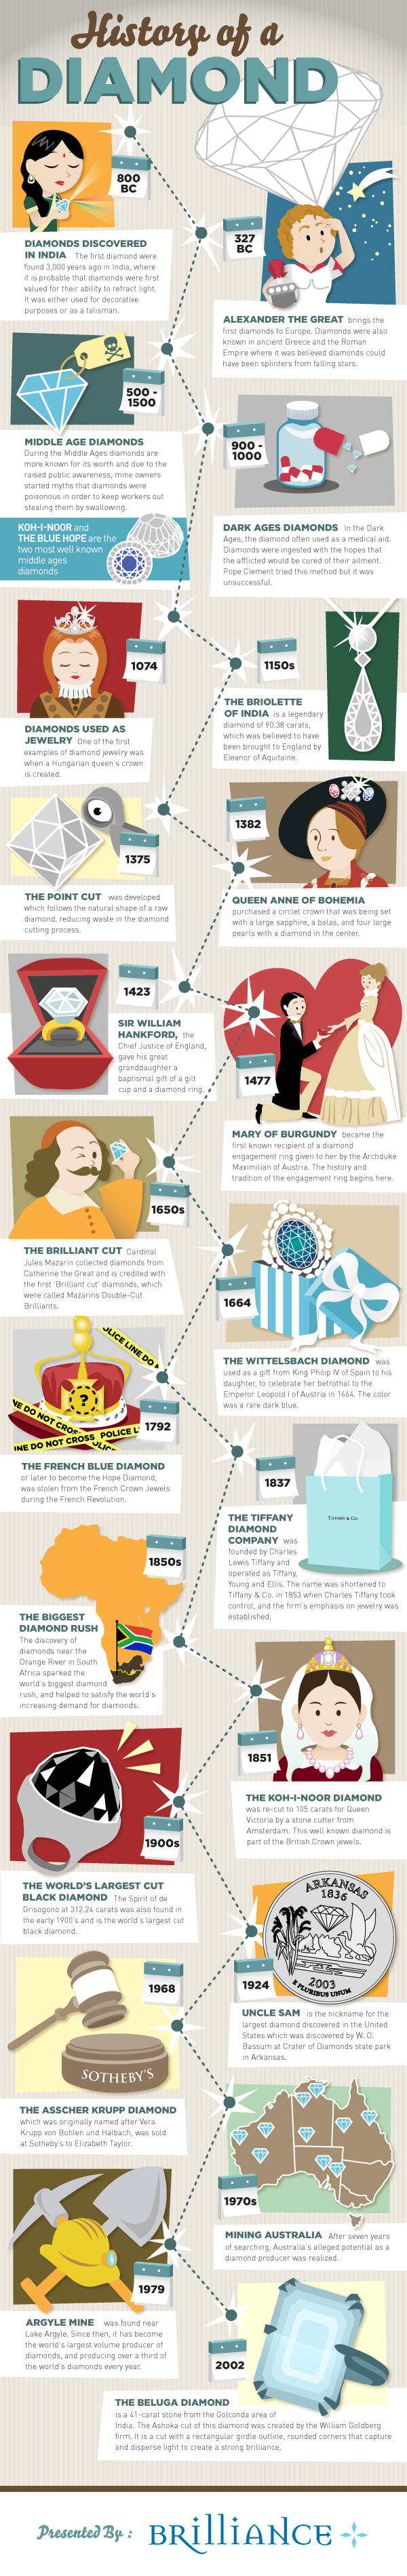 History of diamond